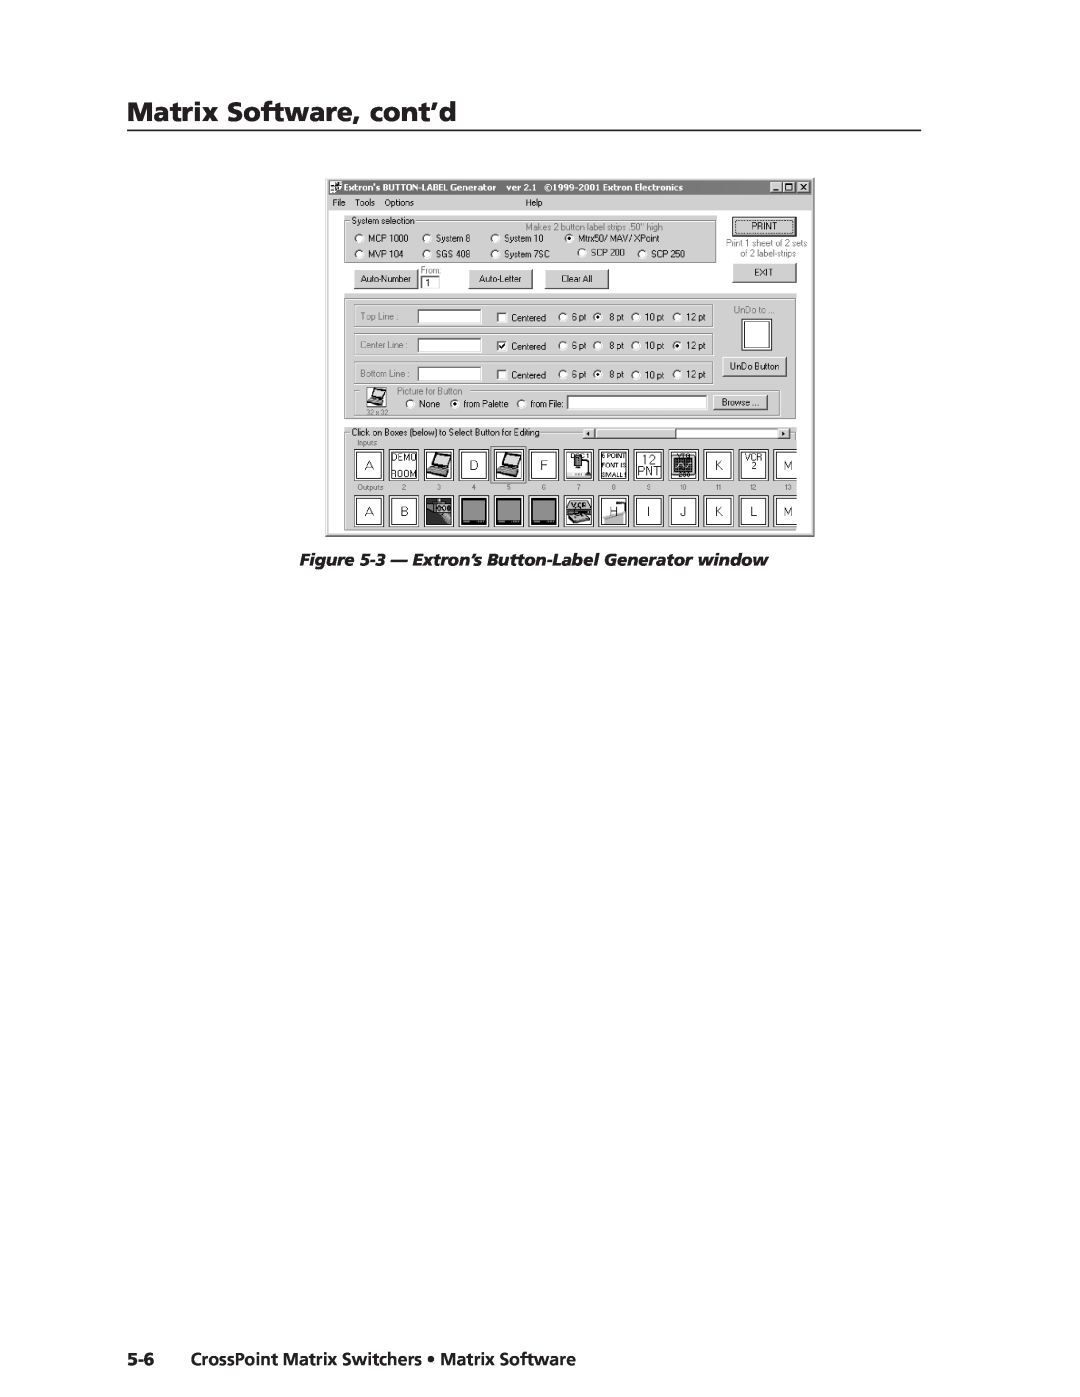 Extron electronic CrossPoint 88 3 - Extron’s Button-Label Generator window, CrossPoint Matrix Switchers Matrix Software 